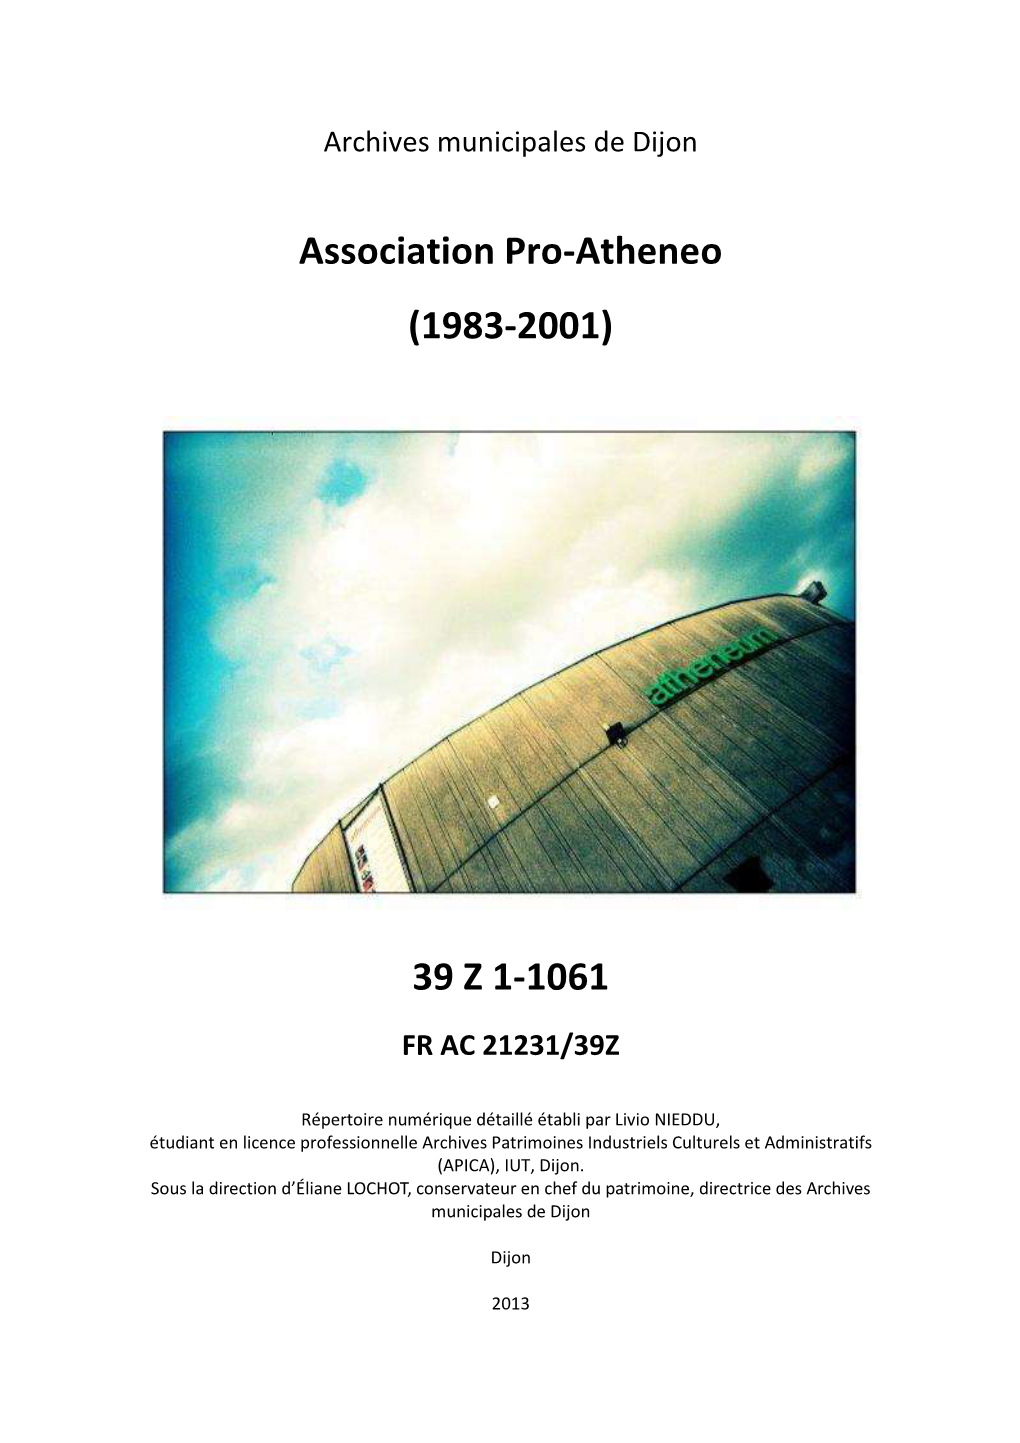 Association Pro-Atheneo (1983-2001) 39